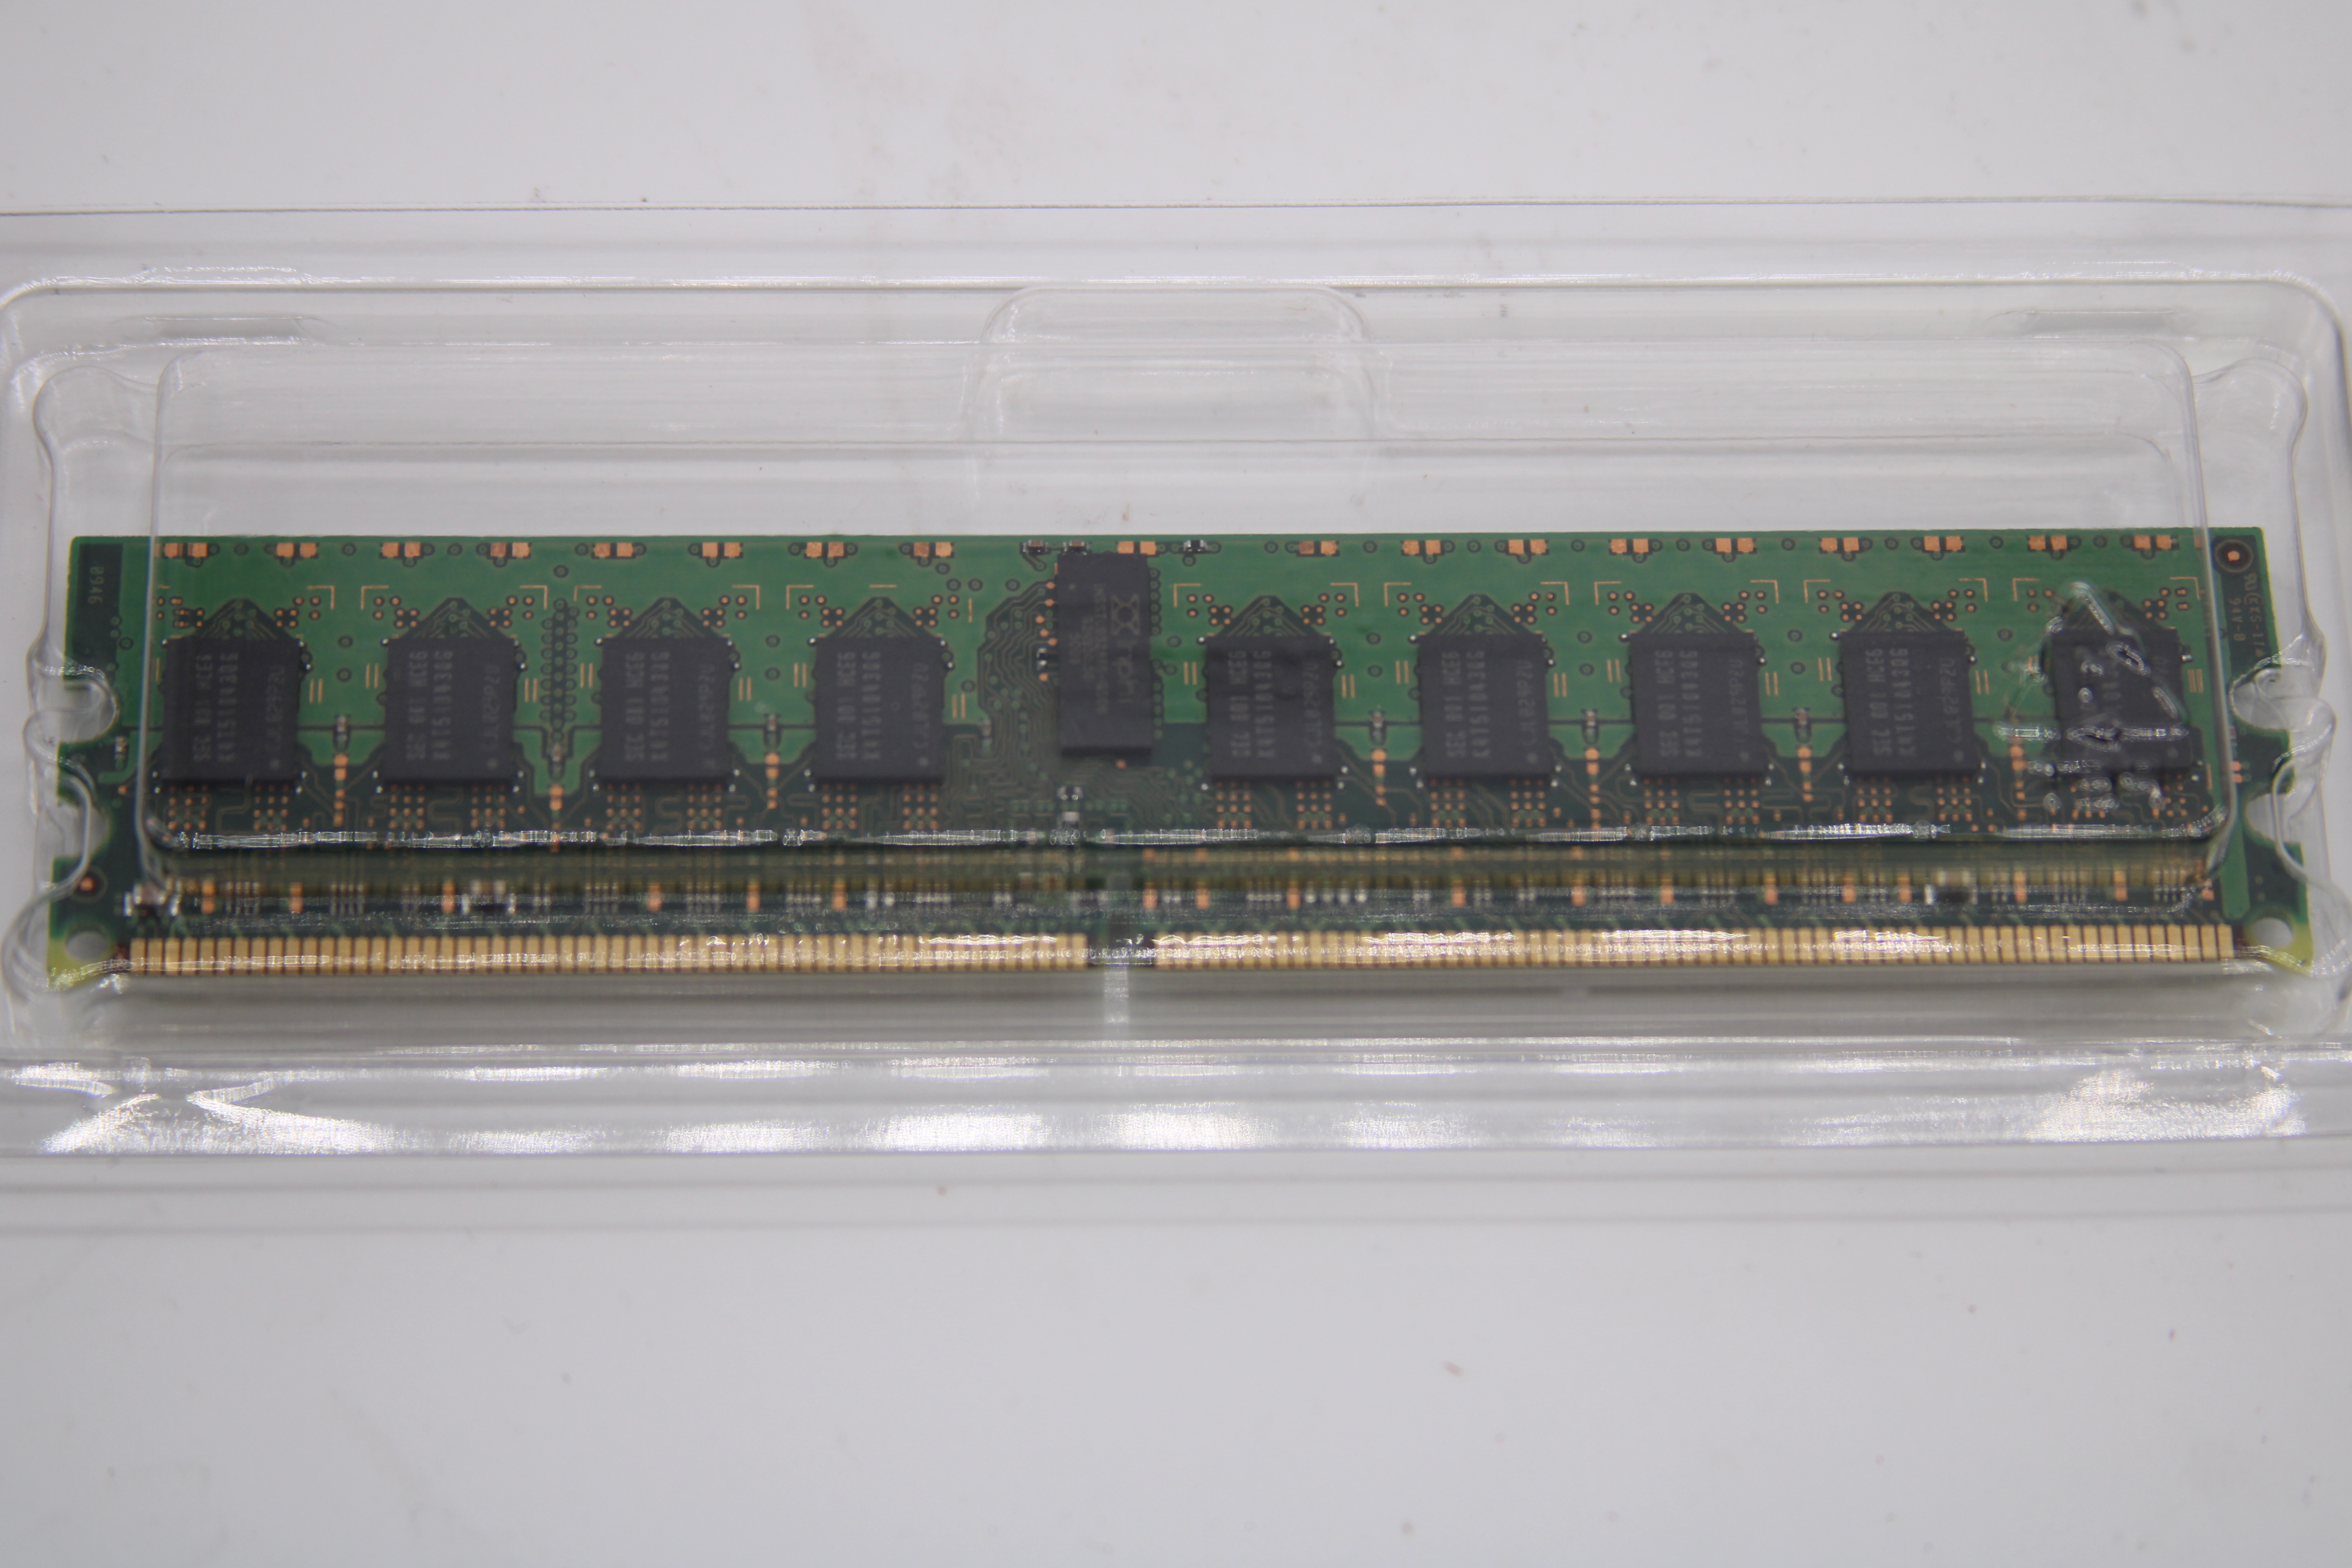 Samsung 1GB RAM Memory 1Rx4 PC2-5300P-555-12-H3 M393T2950GZA